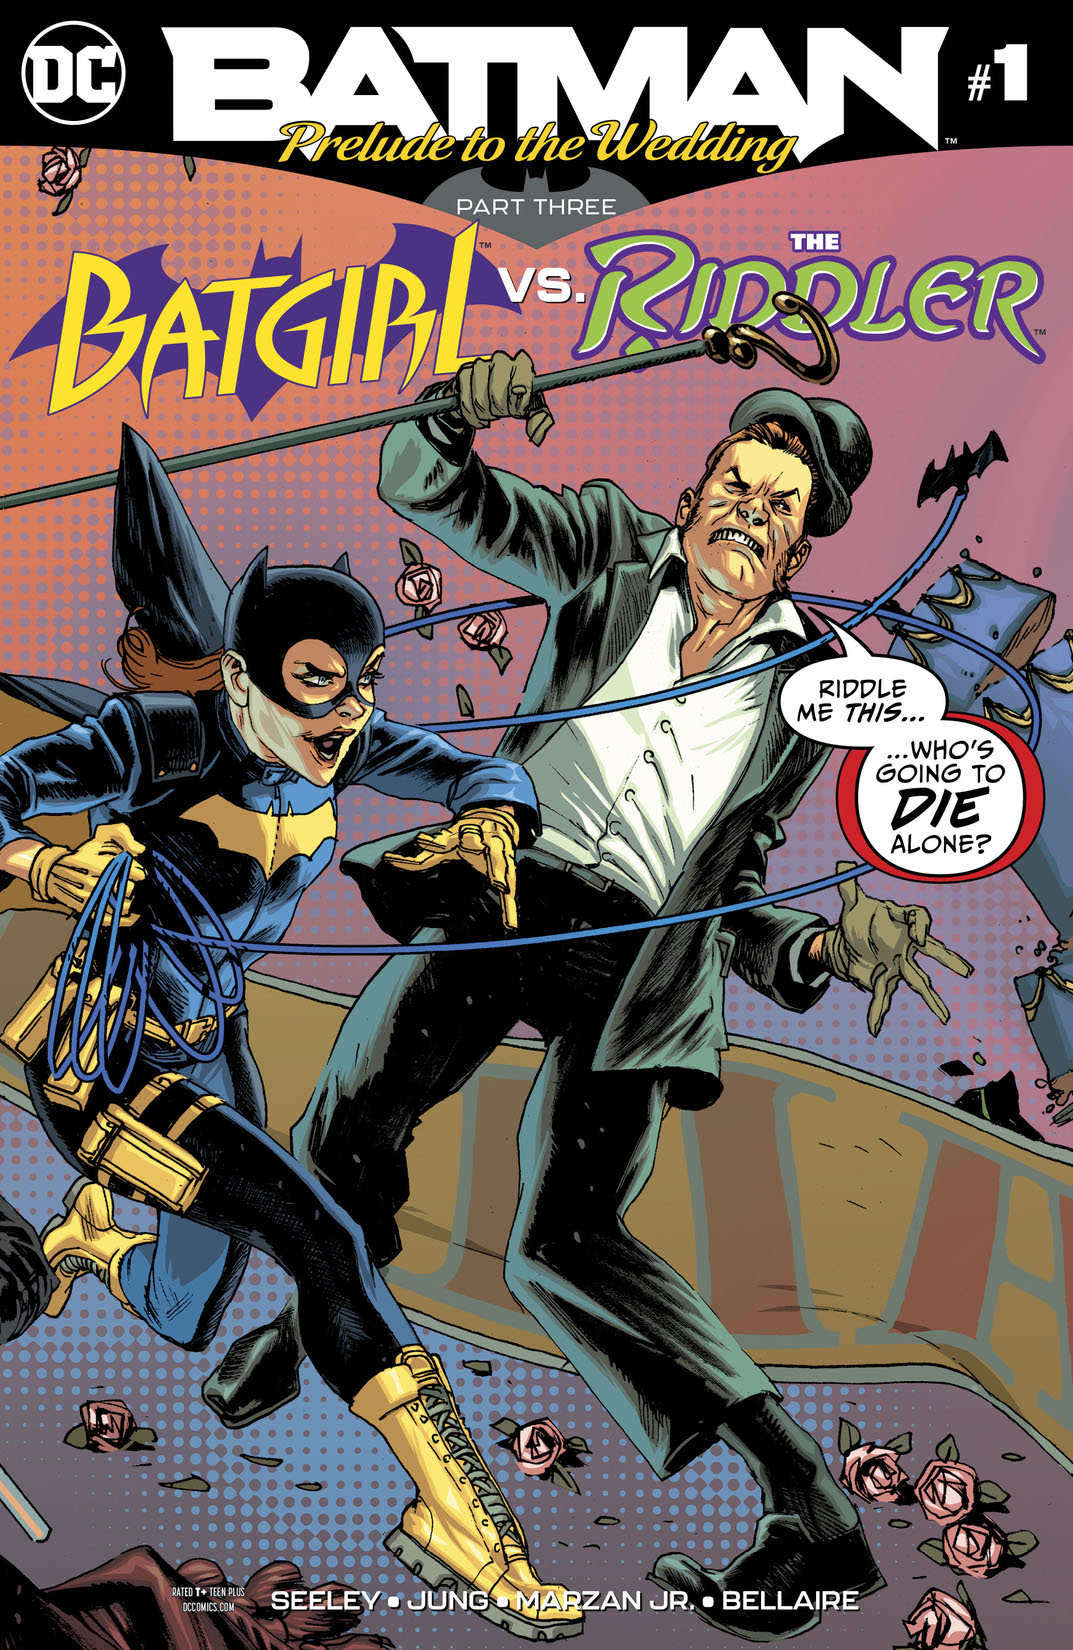 Batman: Prelude to the Wedding: Batgirl vs. Riddler #1 preview images